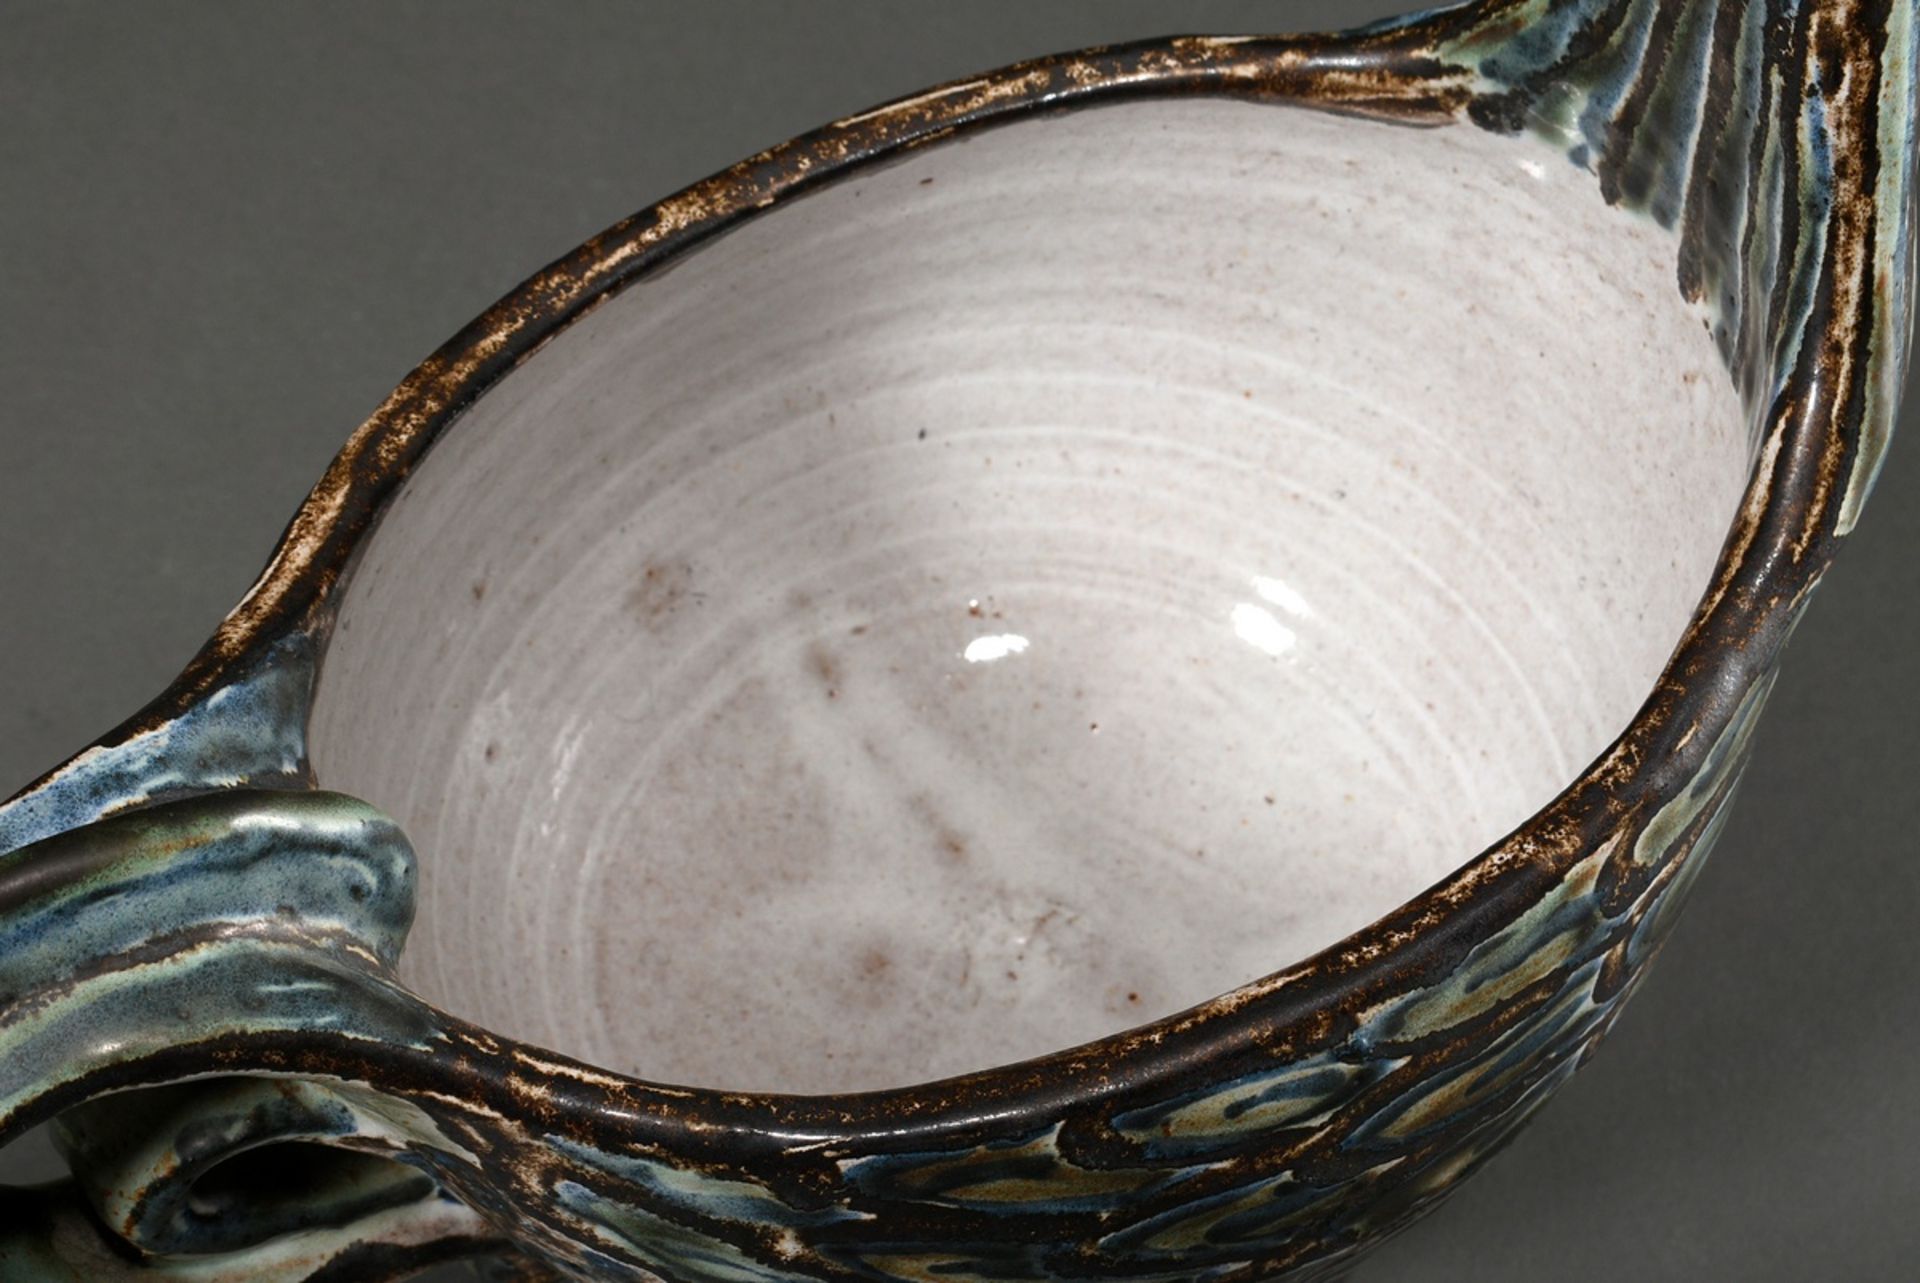 Maetzel, Monika (1917-2010) studio ceramic vessel in animal form "Chicken", ceramic white/green/blu - Image 4 of 6